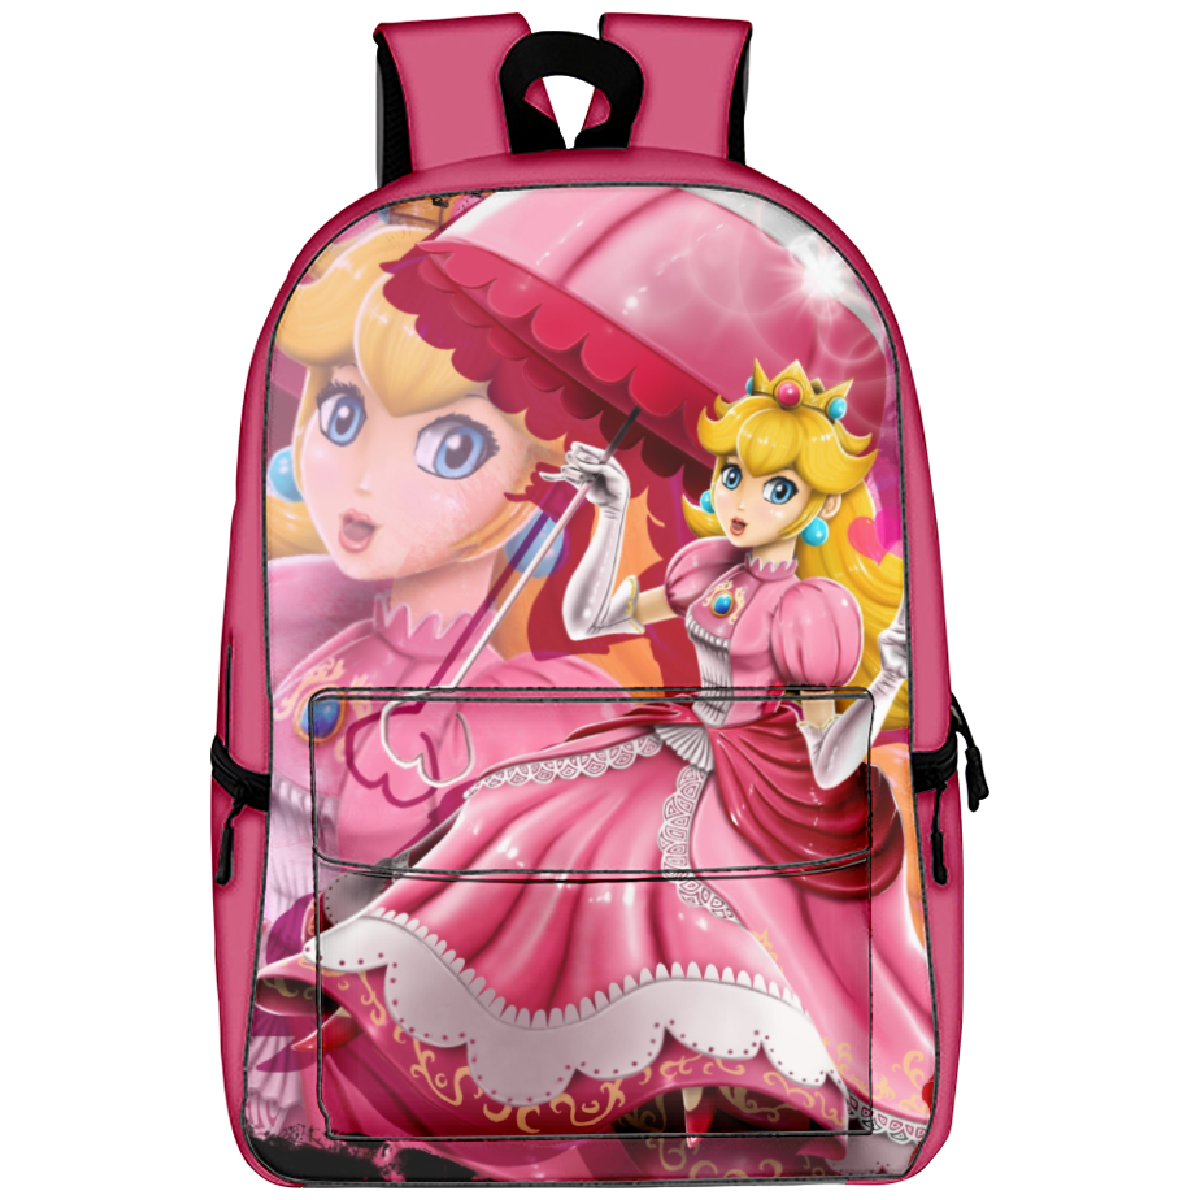 Princess Peach Backpack Kids Princess Allover Print School Bag Girl's Backpack Large Capacity Ideal Present